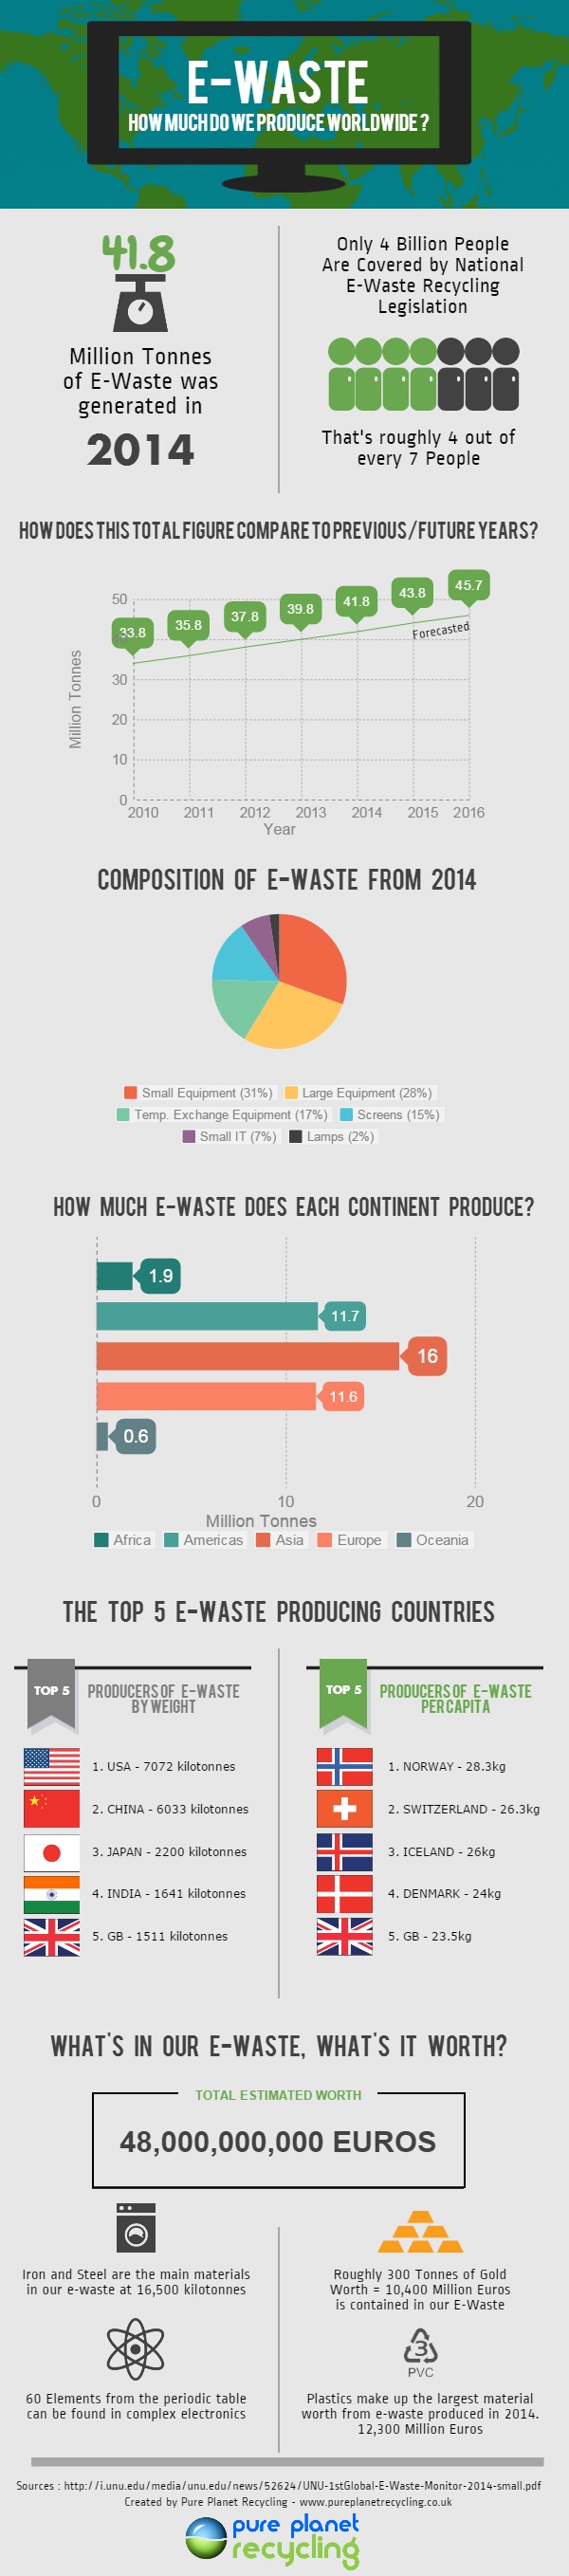 E-Waste infographic